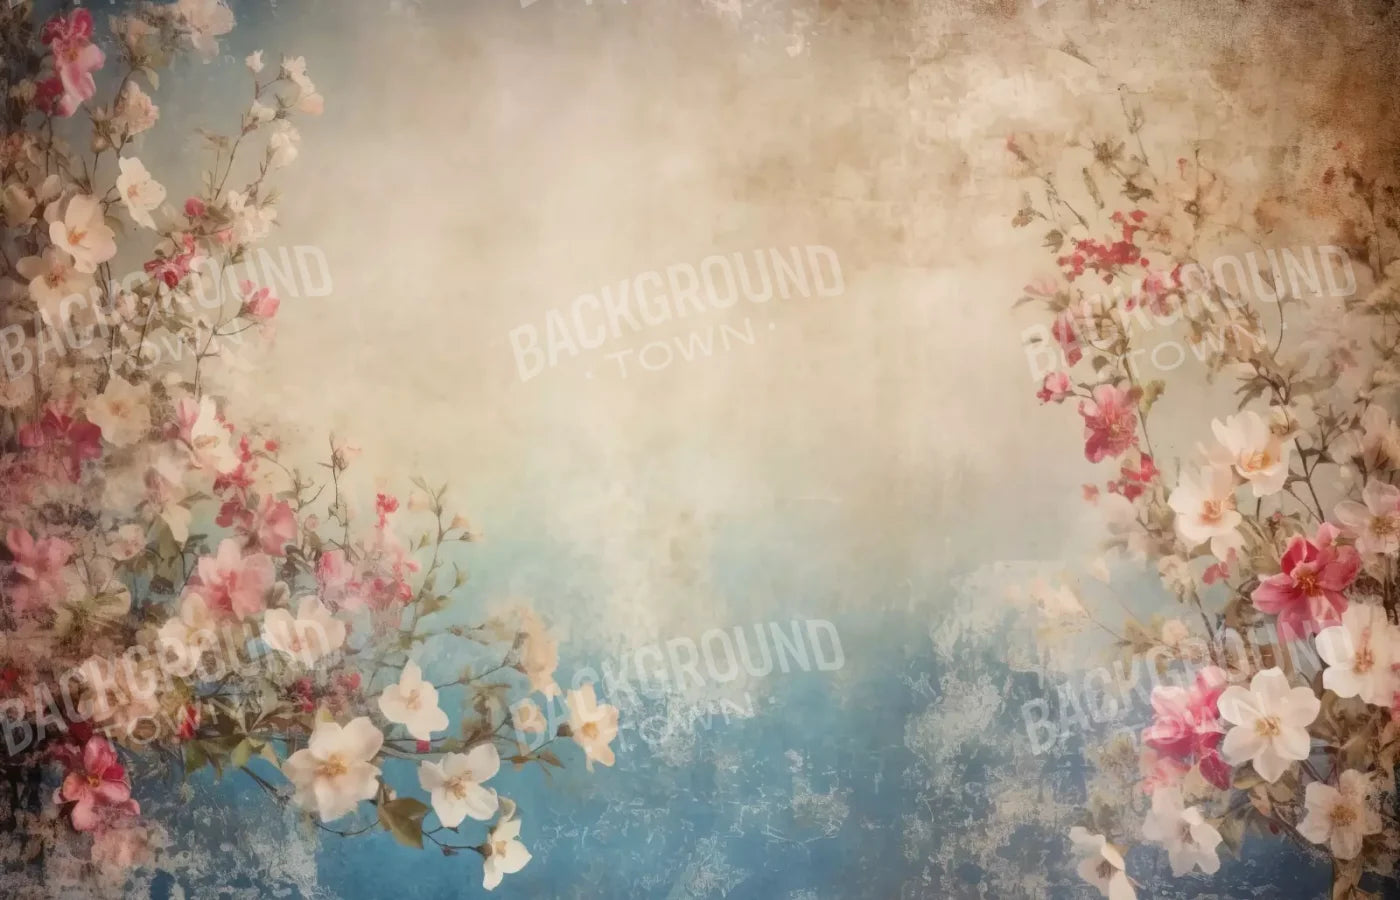 Southern Romance Iii 14’X9’ Ultracloth (168 X 108 Inch) Backdrop